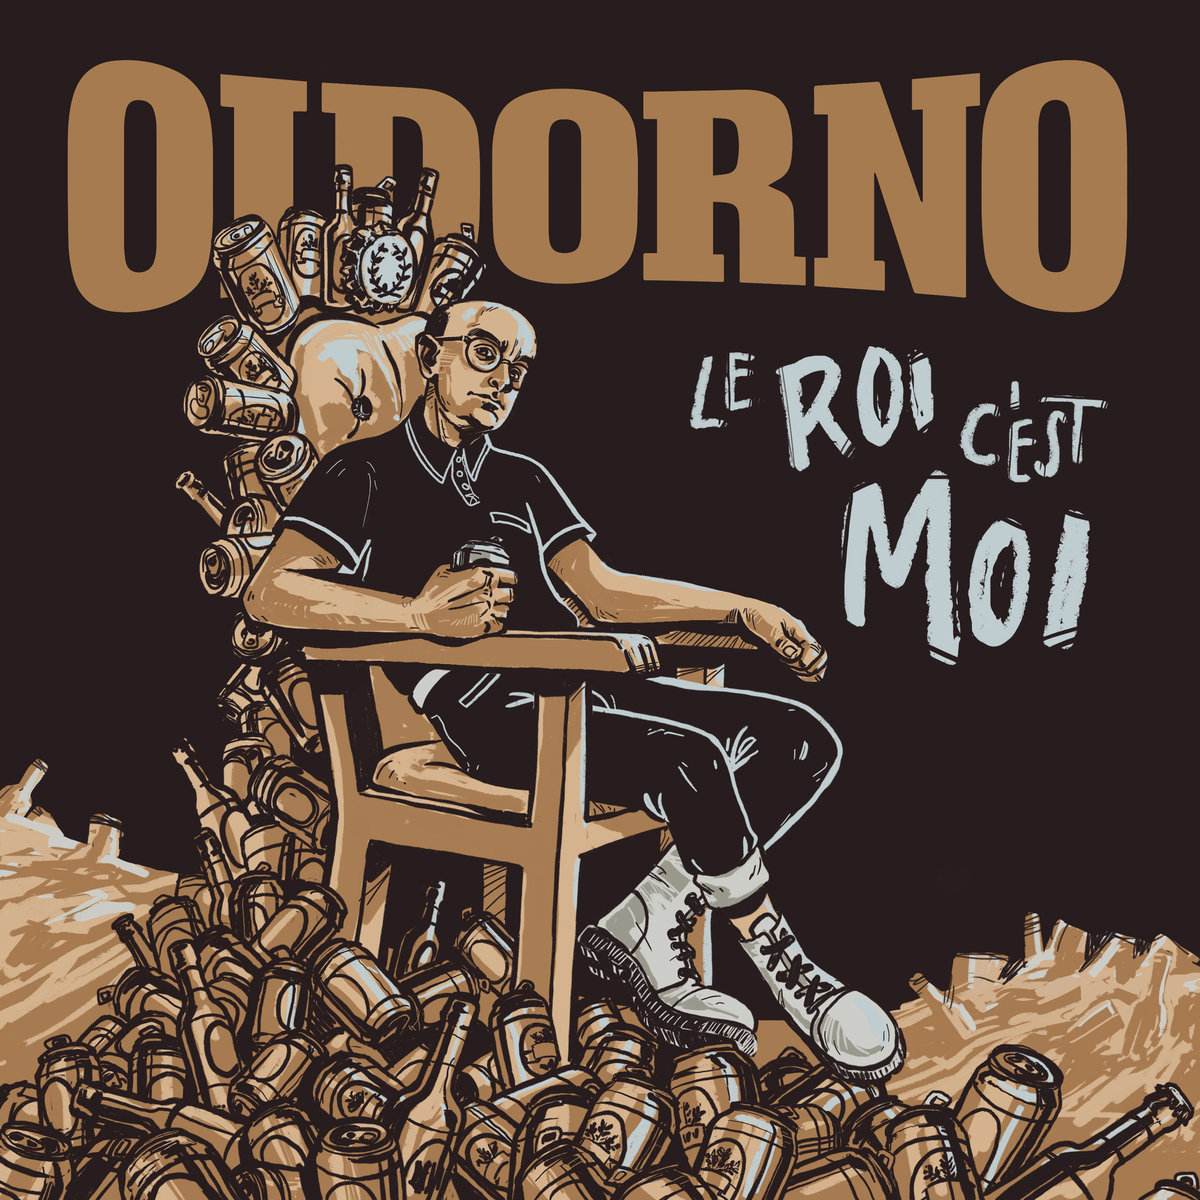 Oidorno - Le Roi c'est Moi